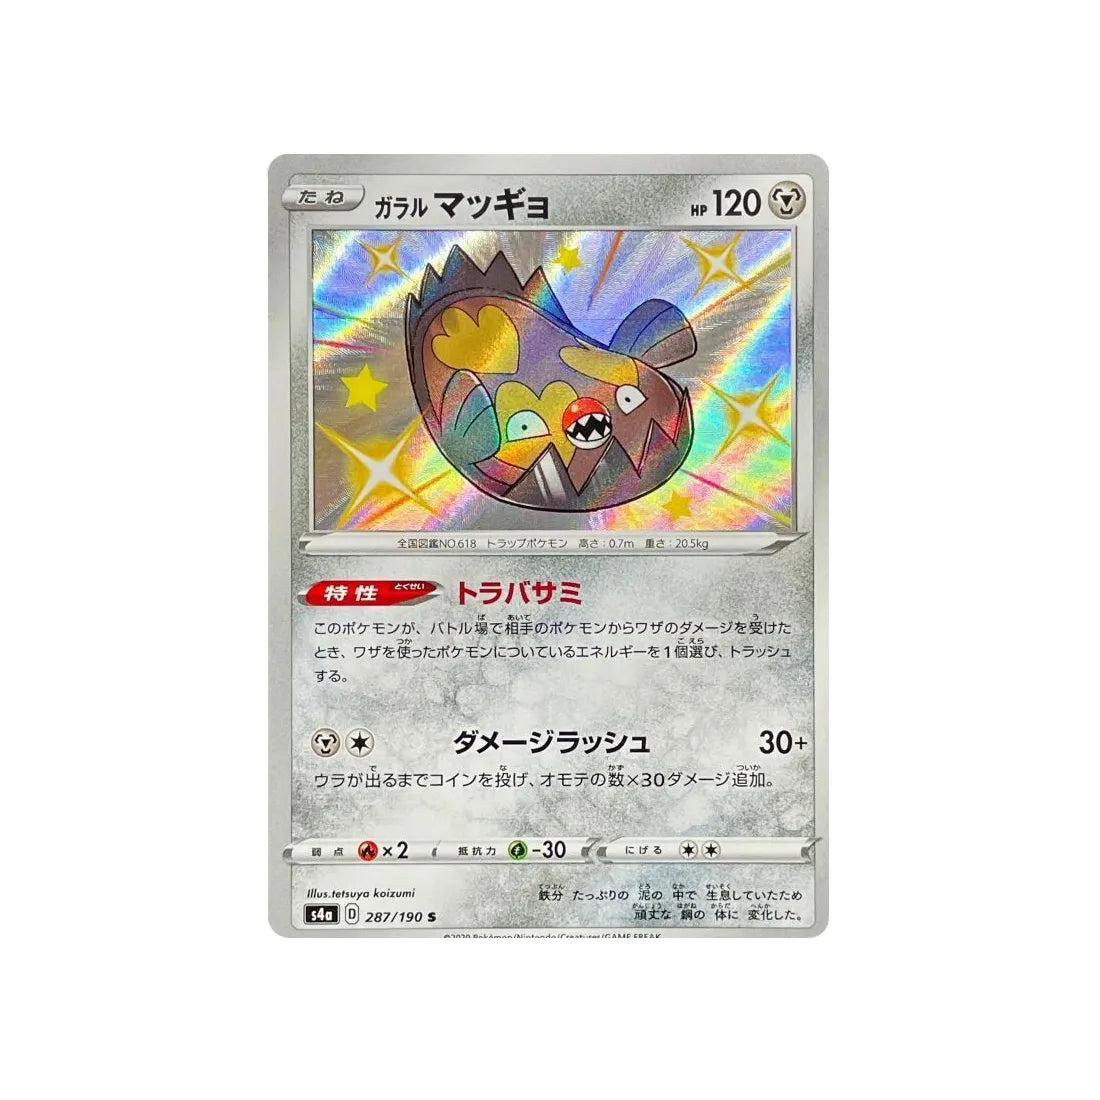 Peluche Pokémon Evoli Shiny - Carte Pokemon Rare